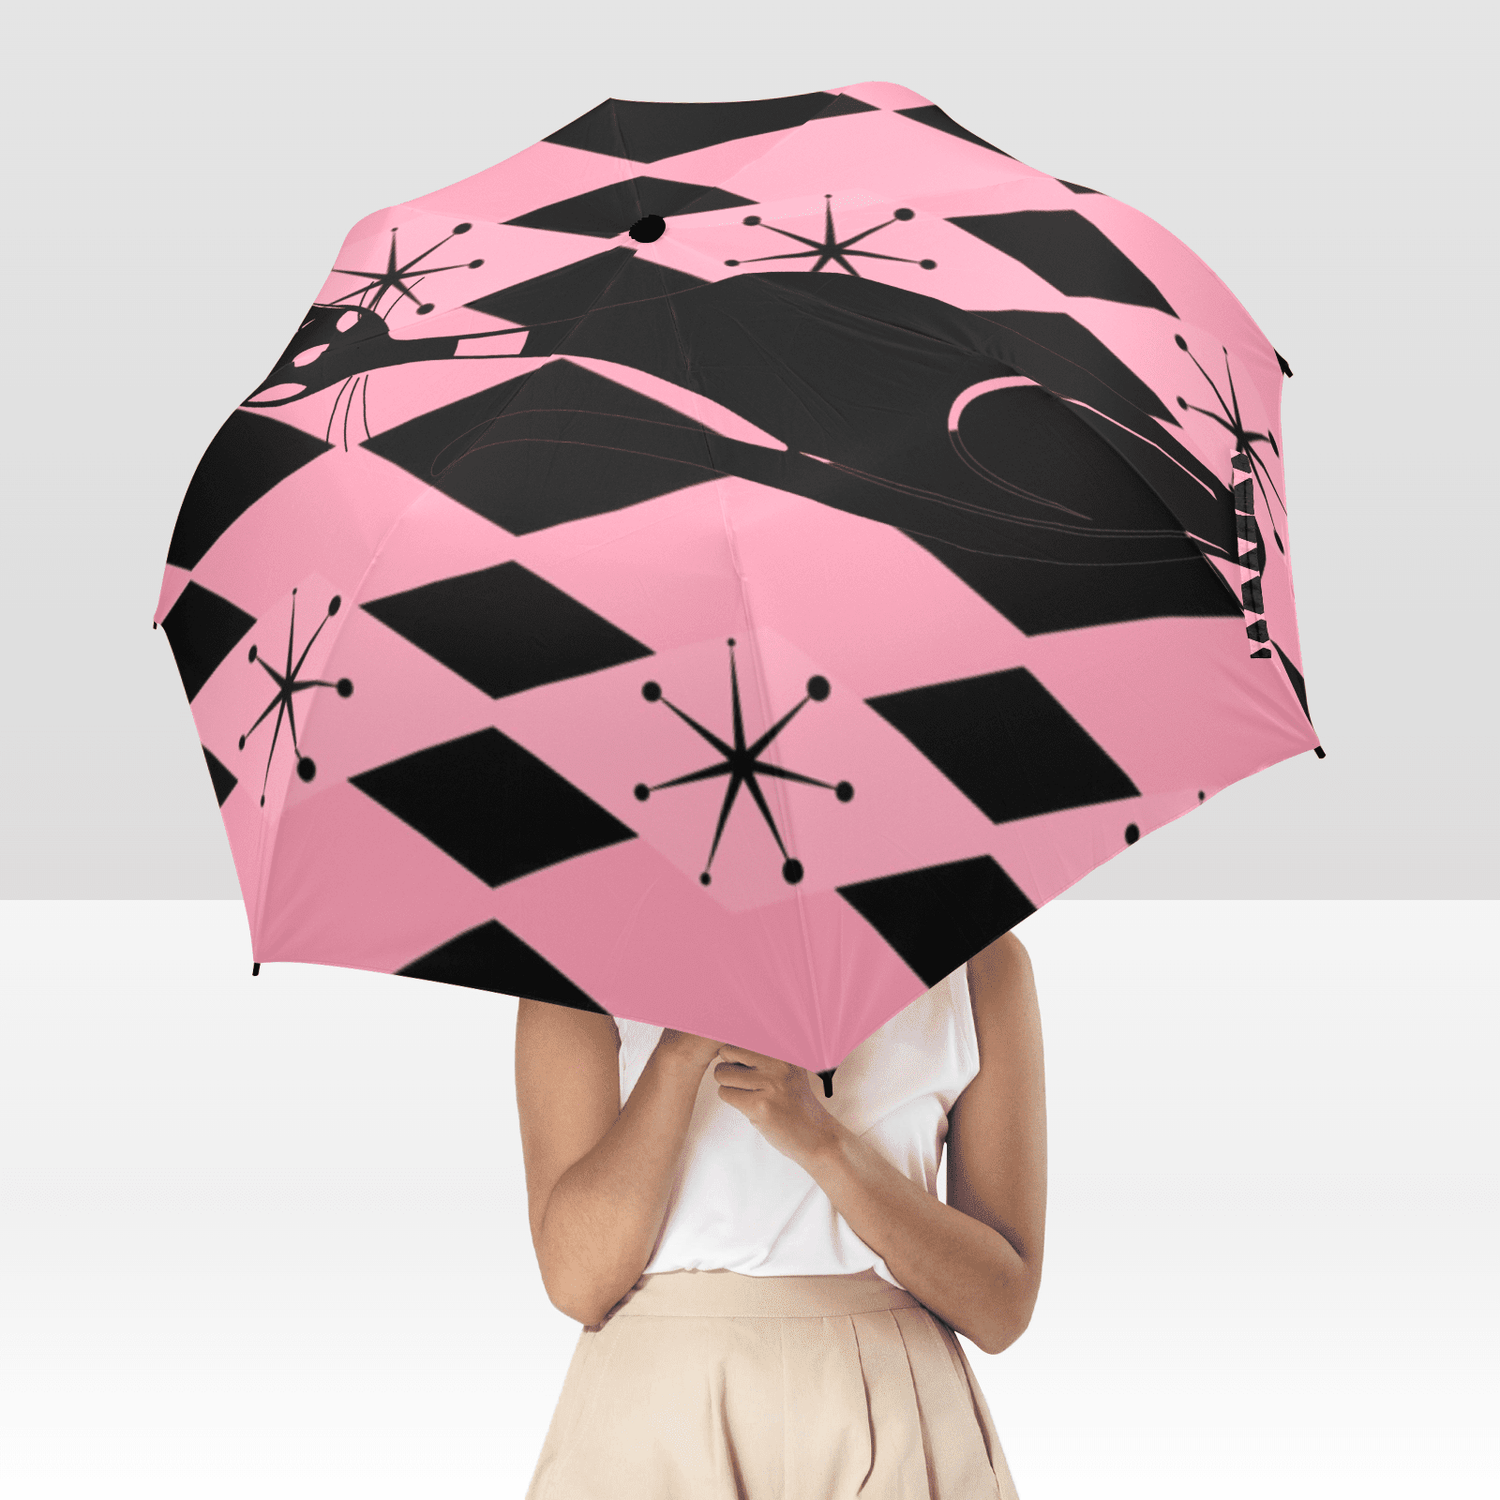 Groovy Mid Mod Vibes Retro Umbrella Rain or Sun